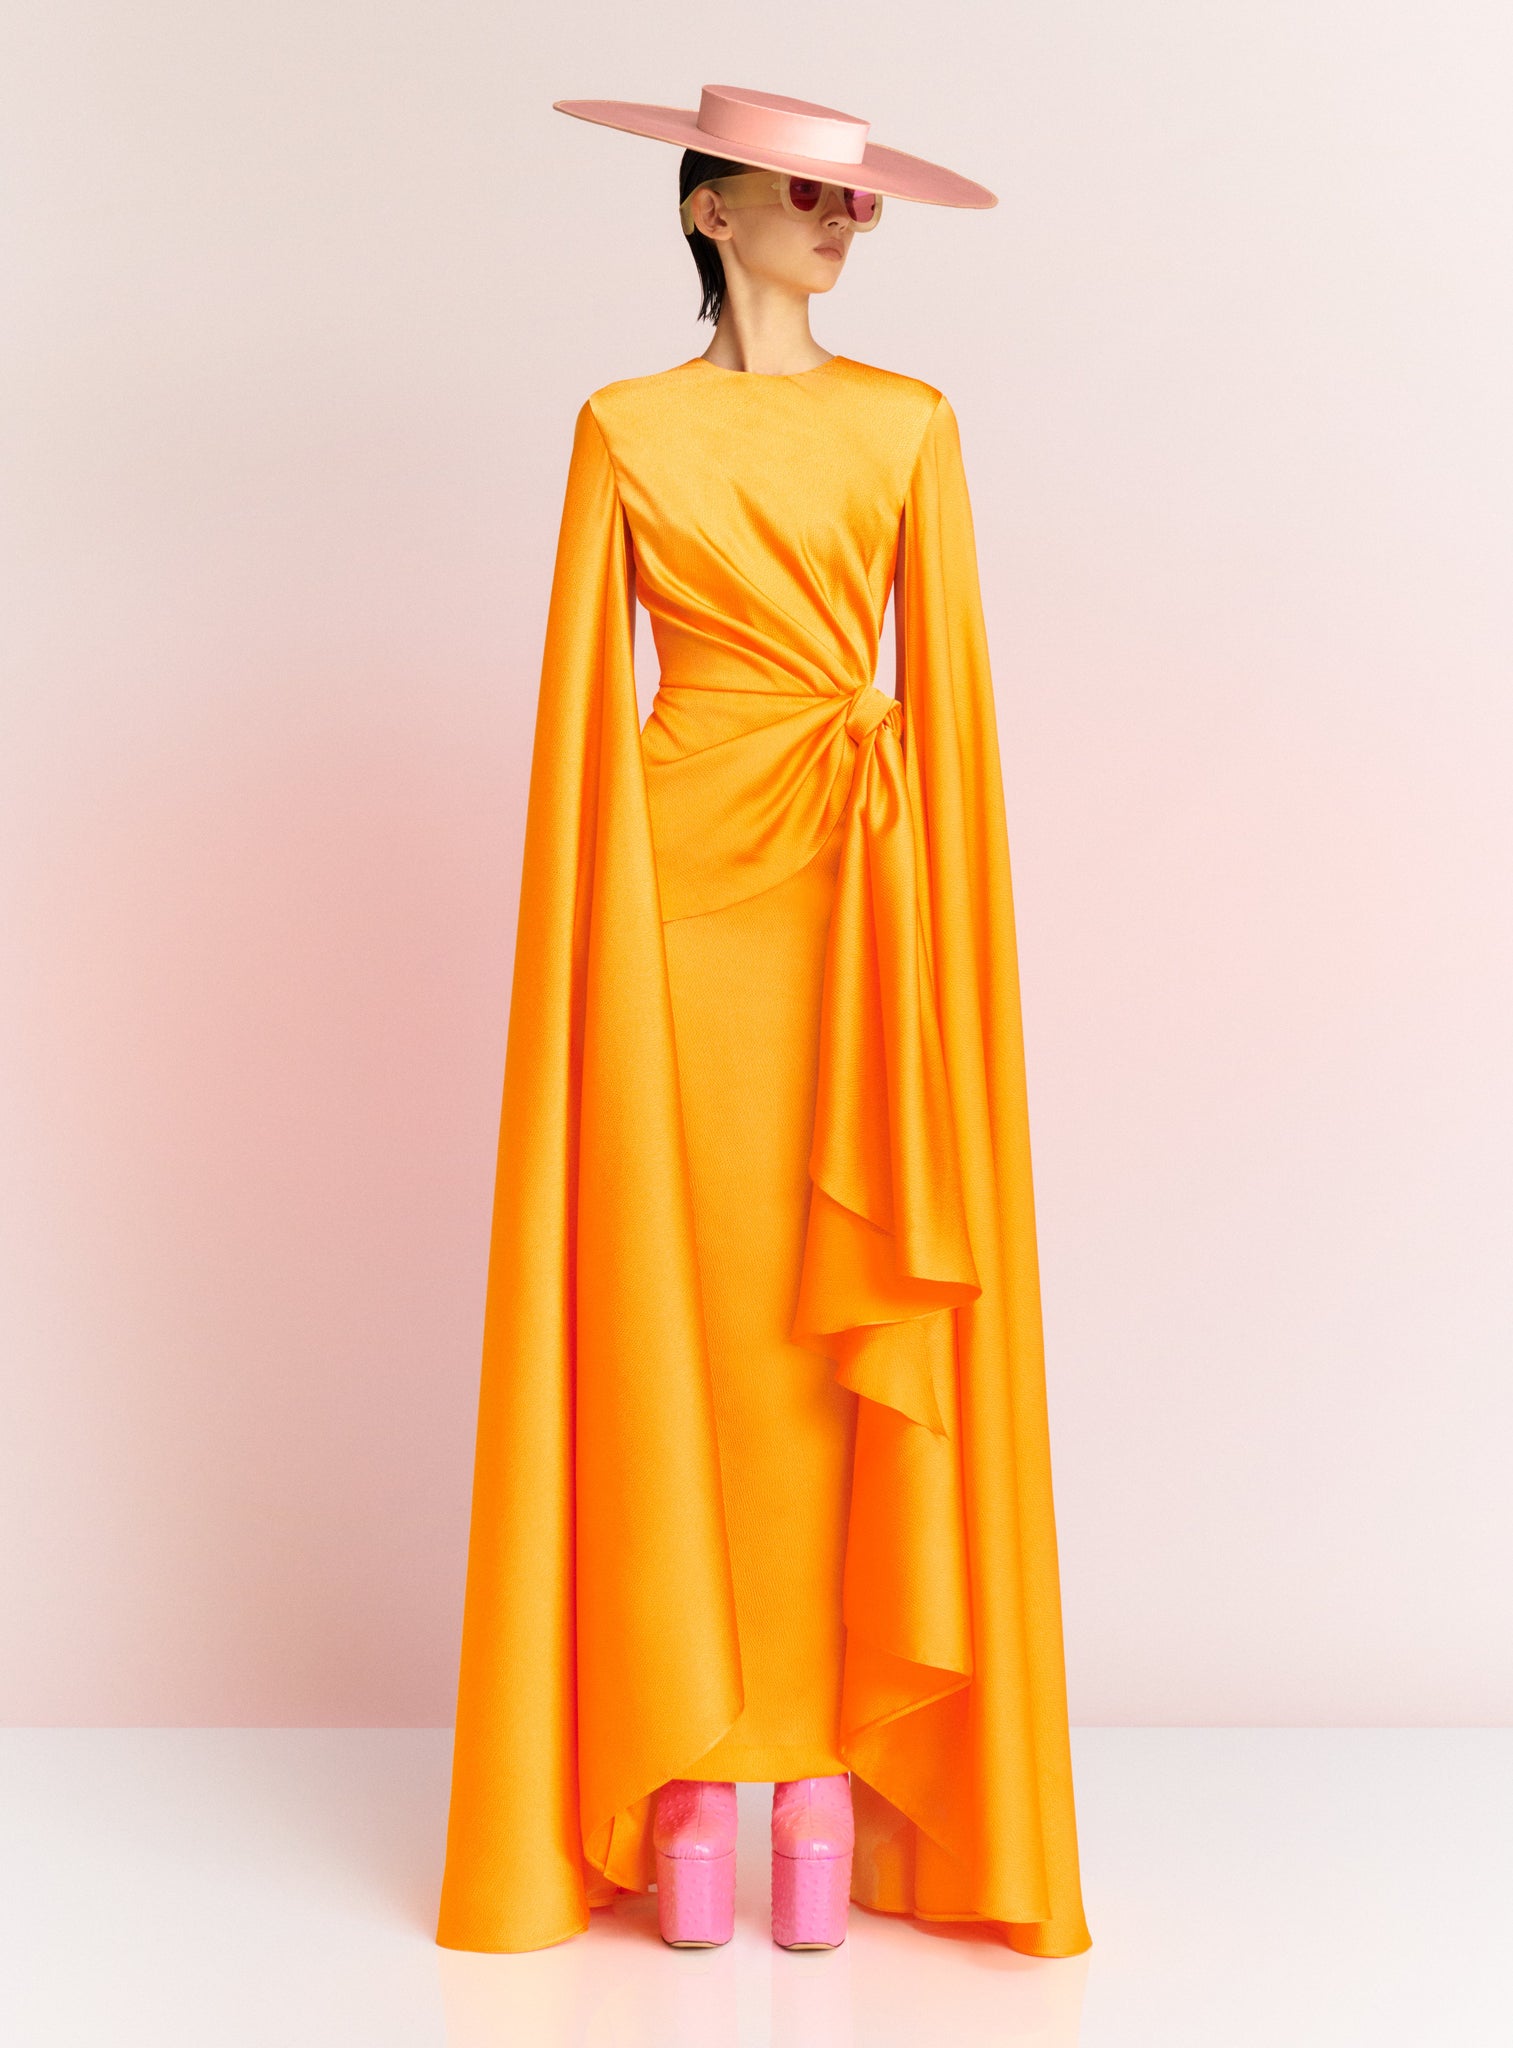 The Elya Maxi Dress in Orange